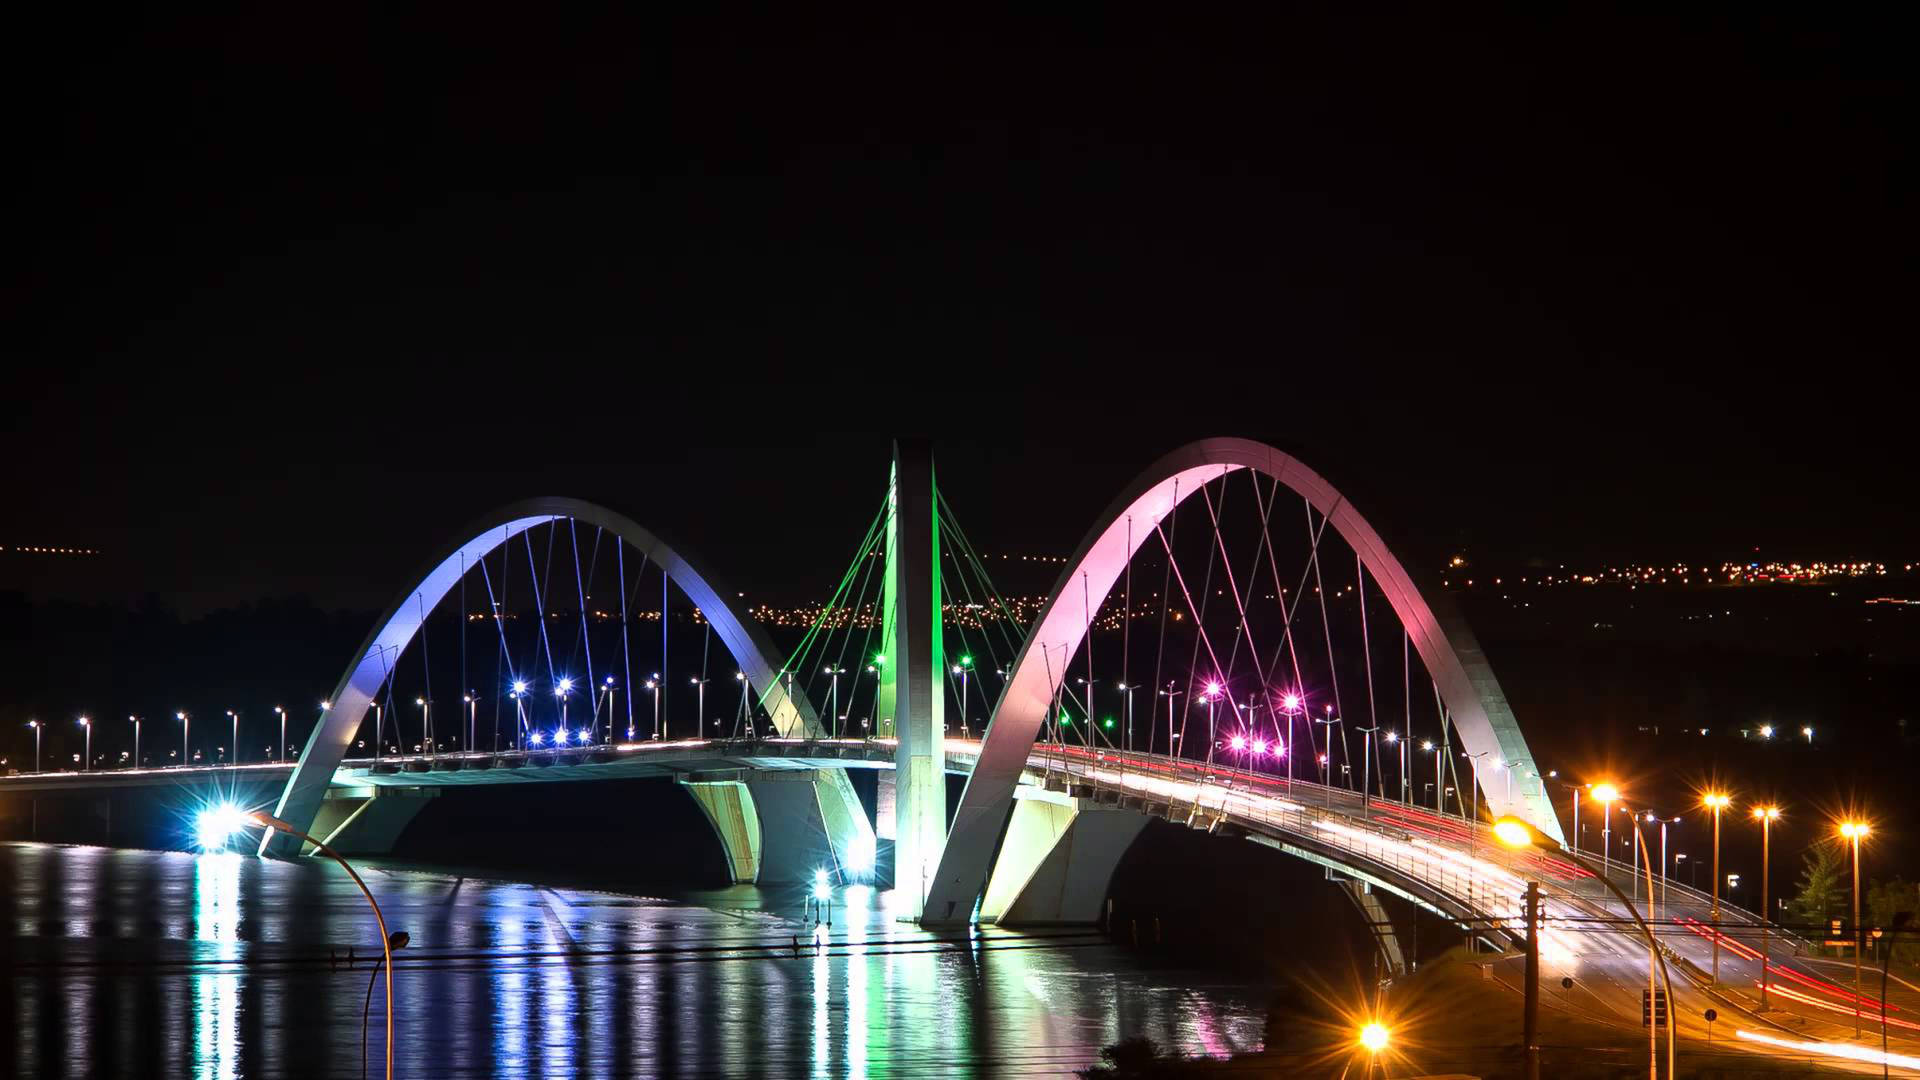 Scenic View Of The Iconic Juscelino Kubitschek Bridge In Brazil Background